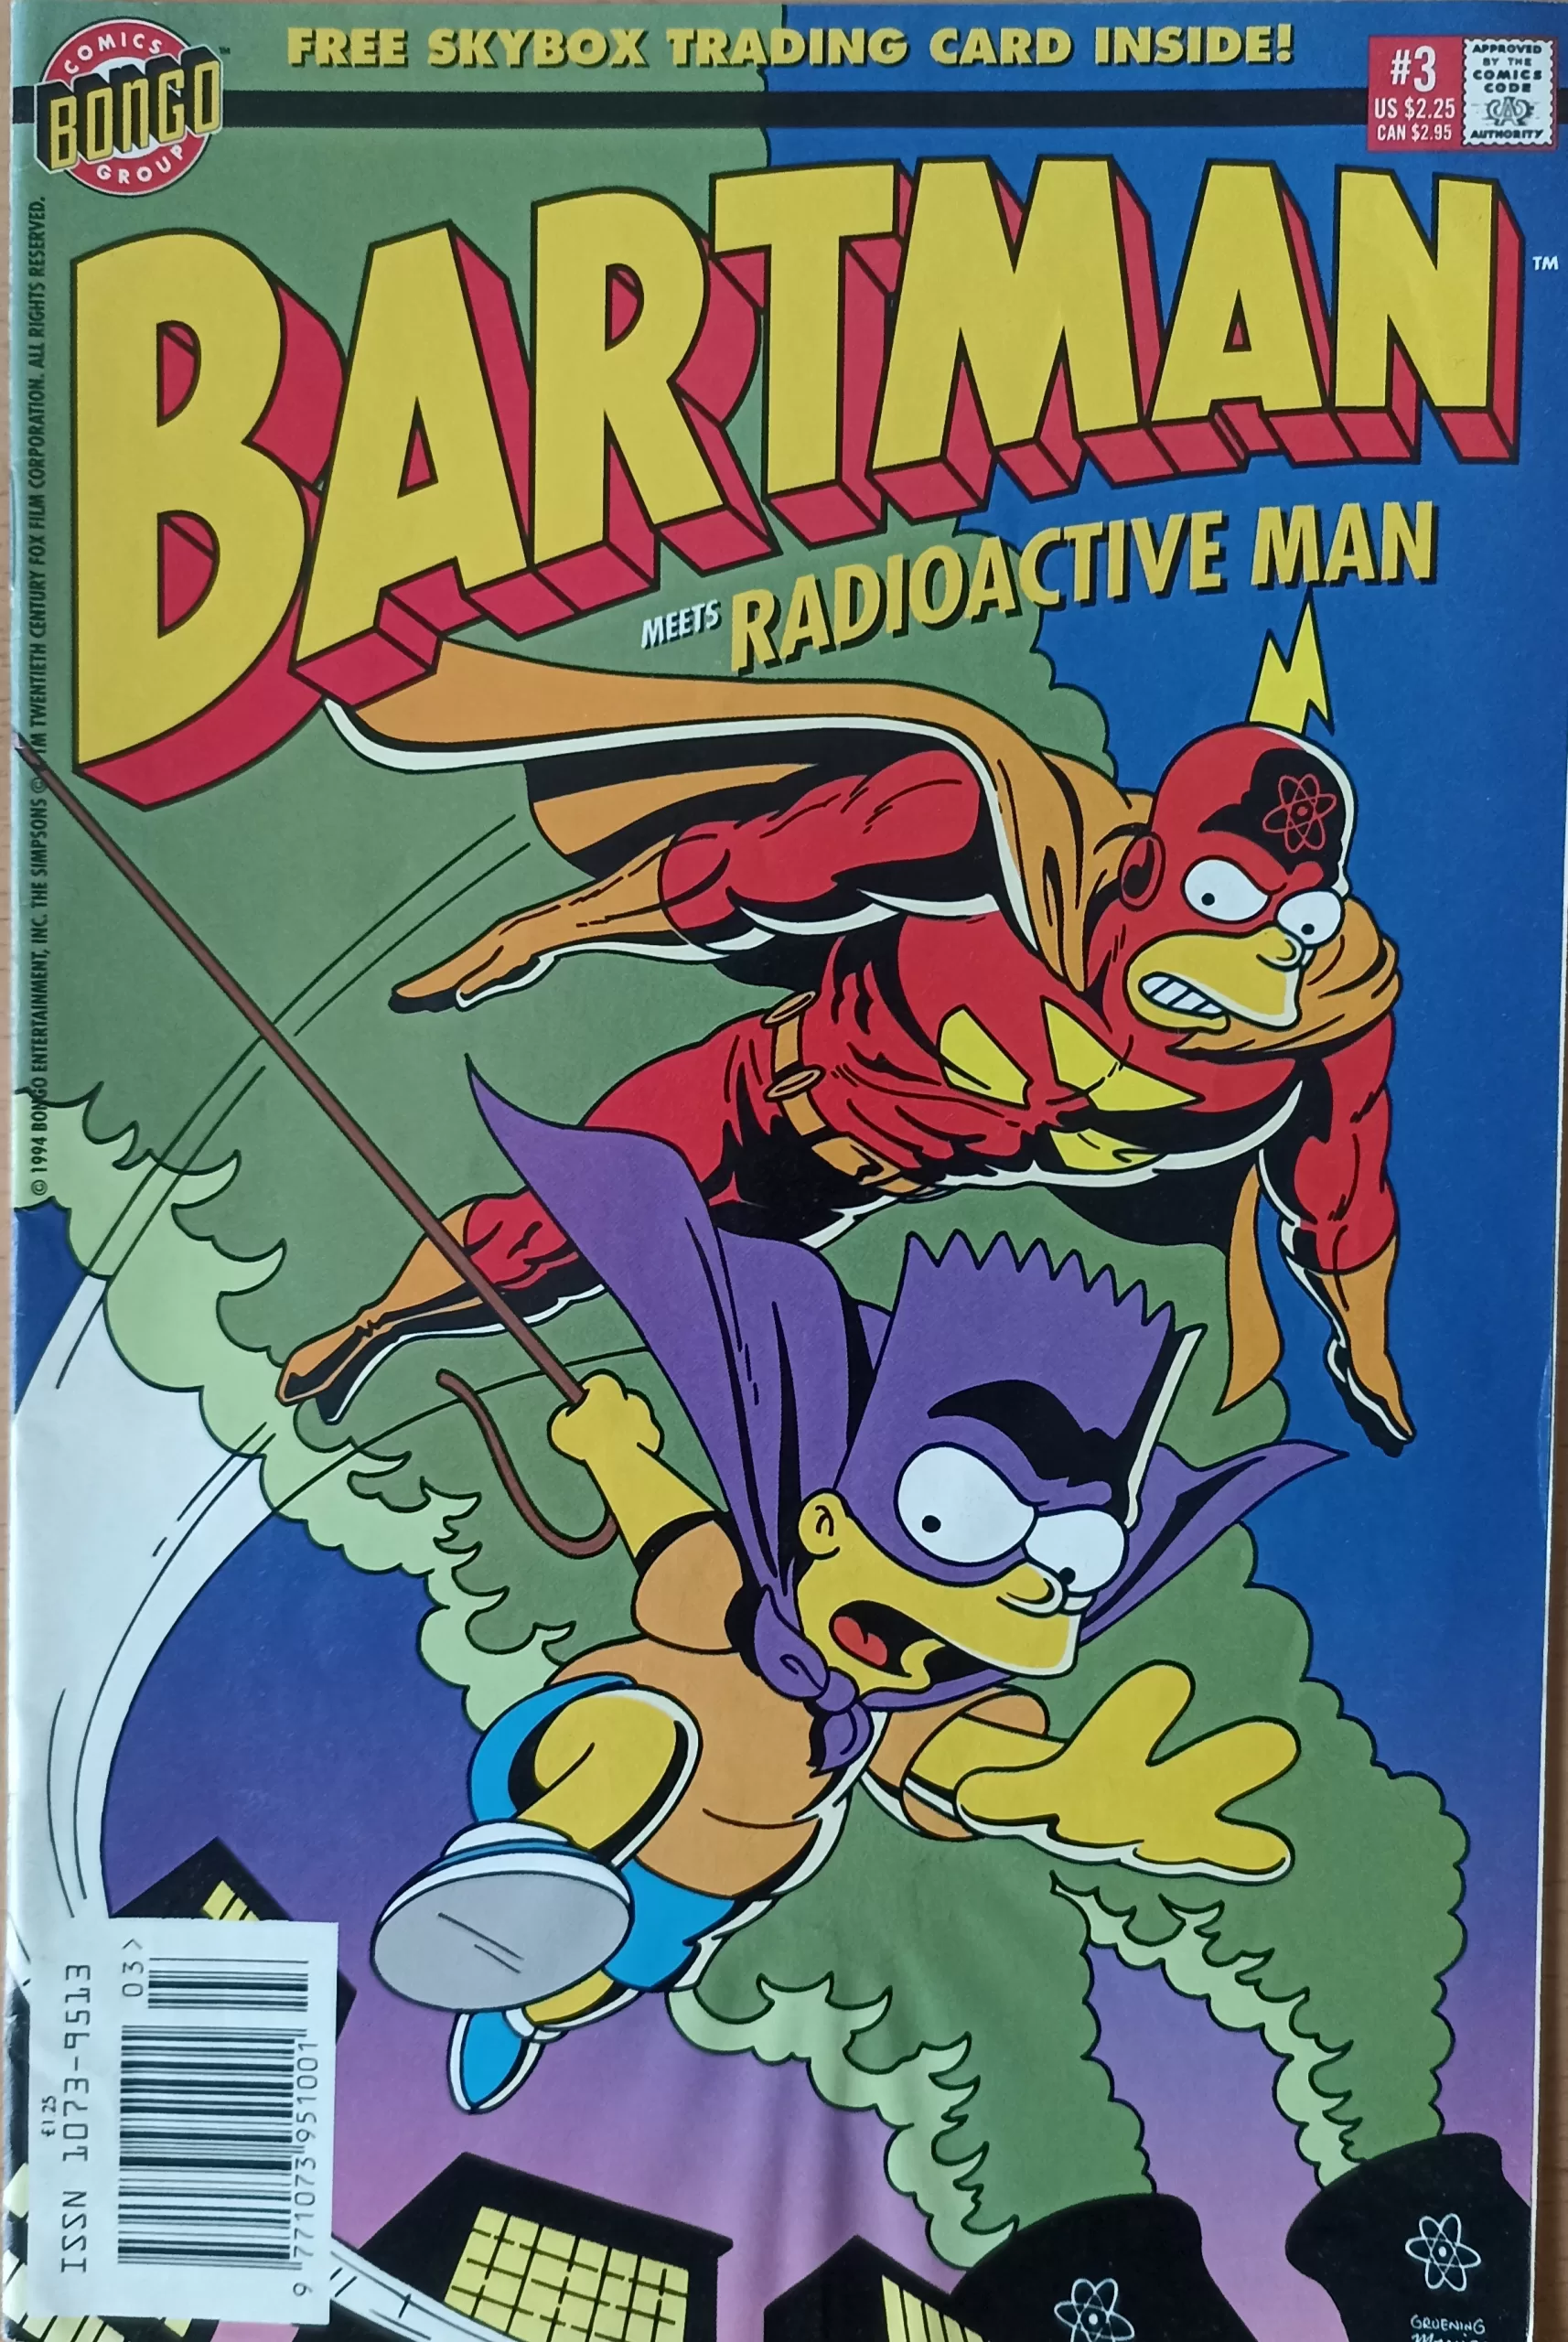 Bartman #3, Bartman Meets Radioactive Man, Bongo Comics, 1994